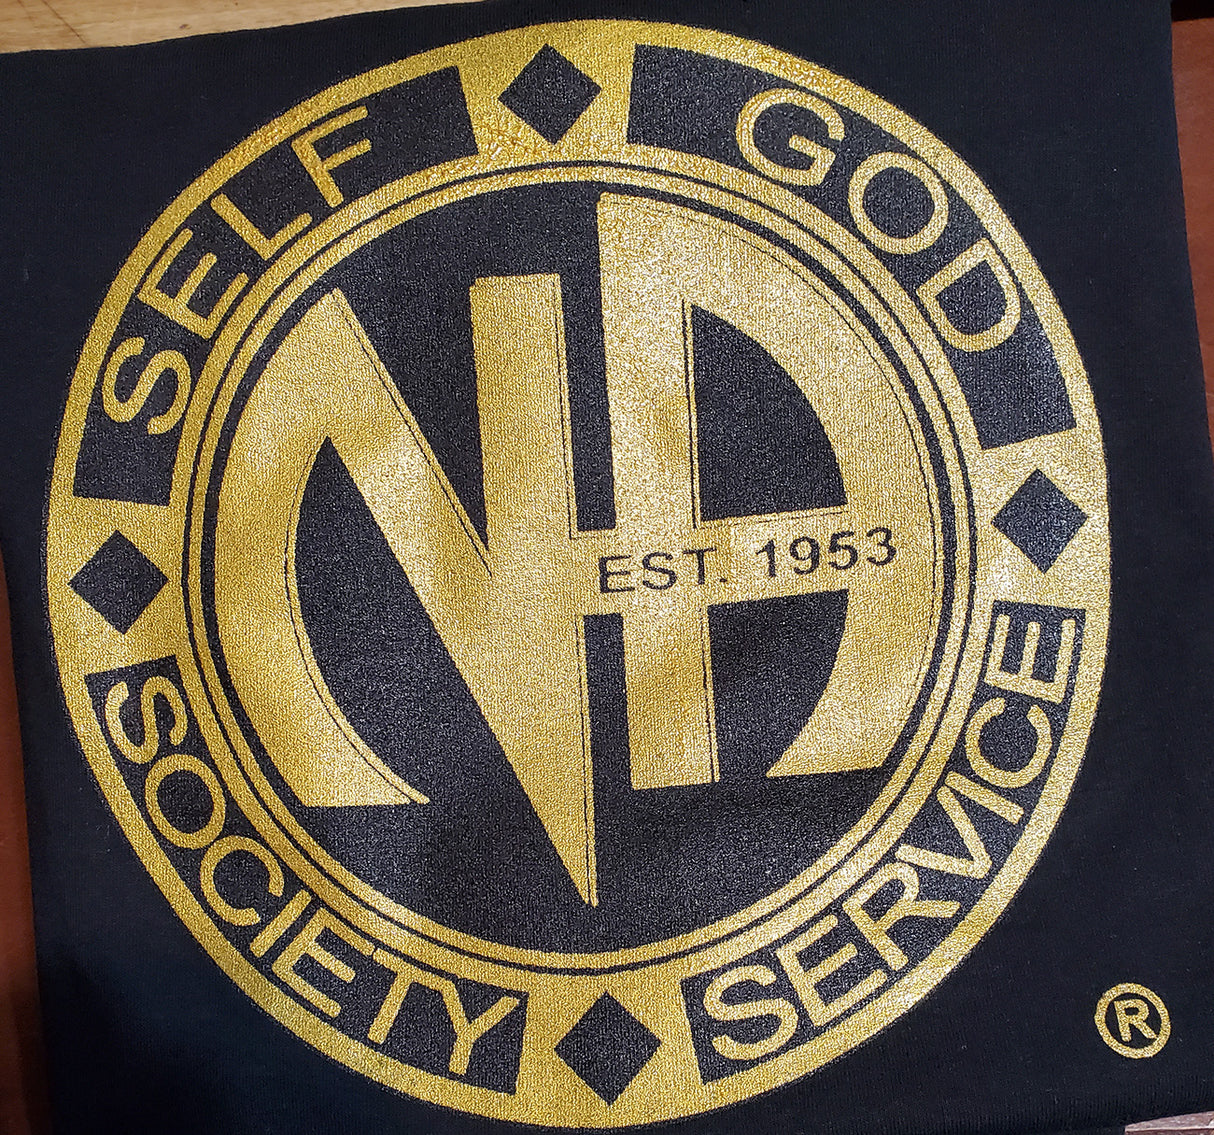 Self God Society Service GOLD SS Tee